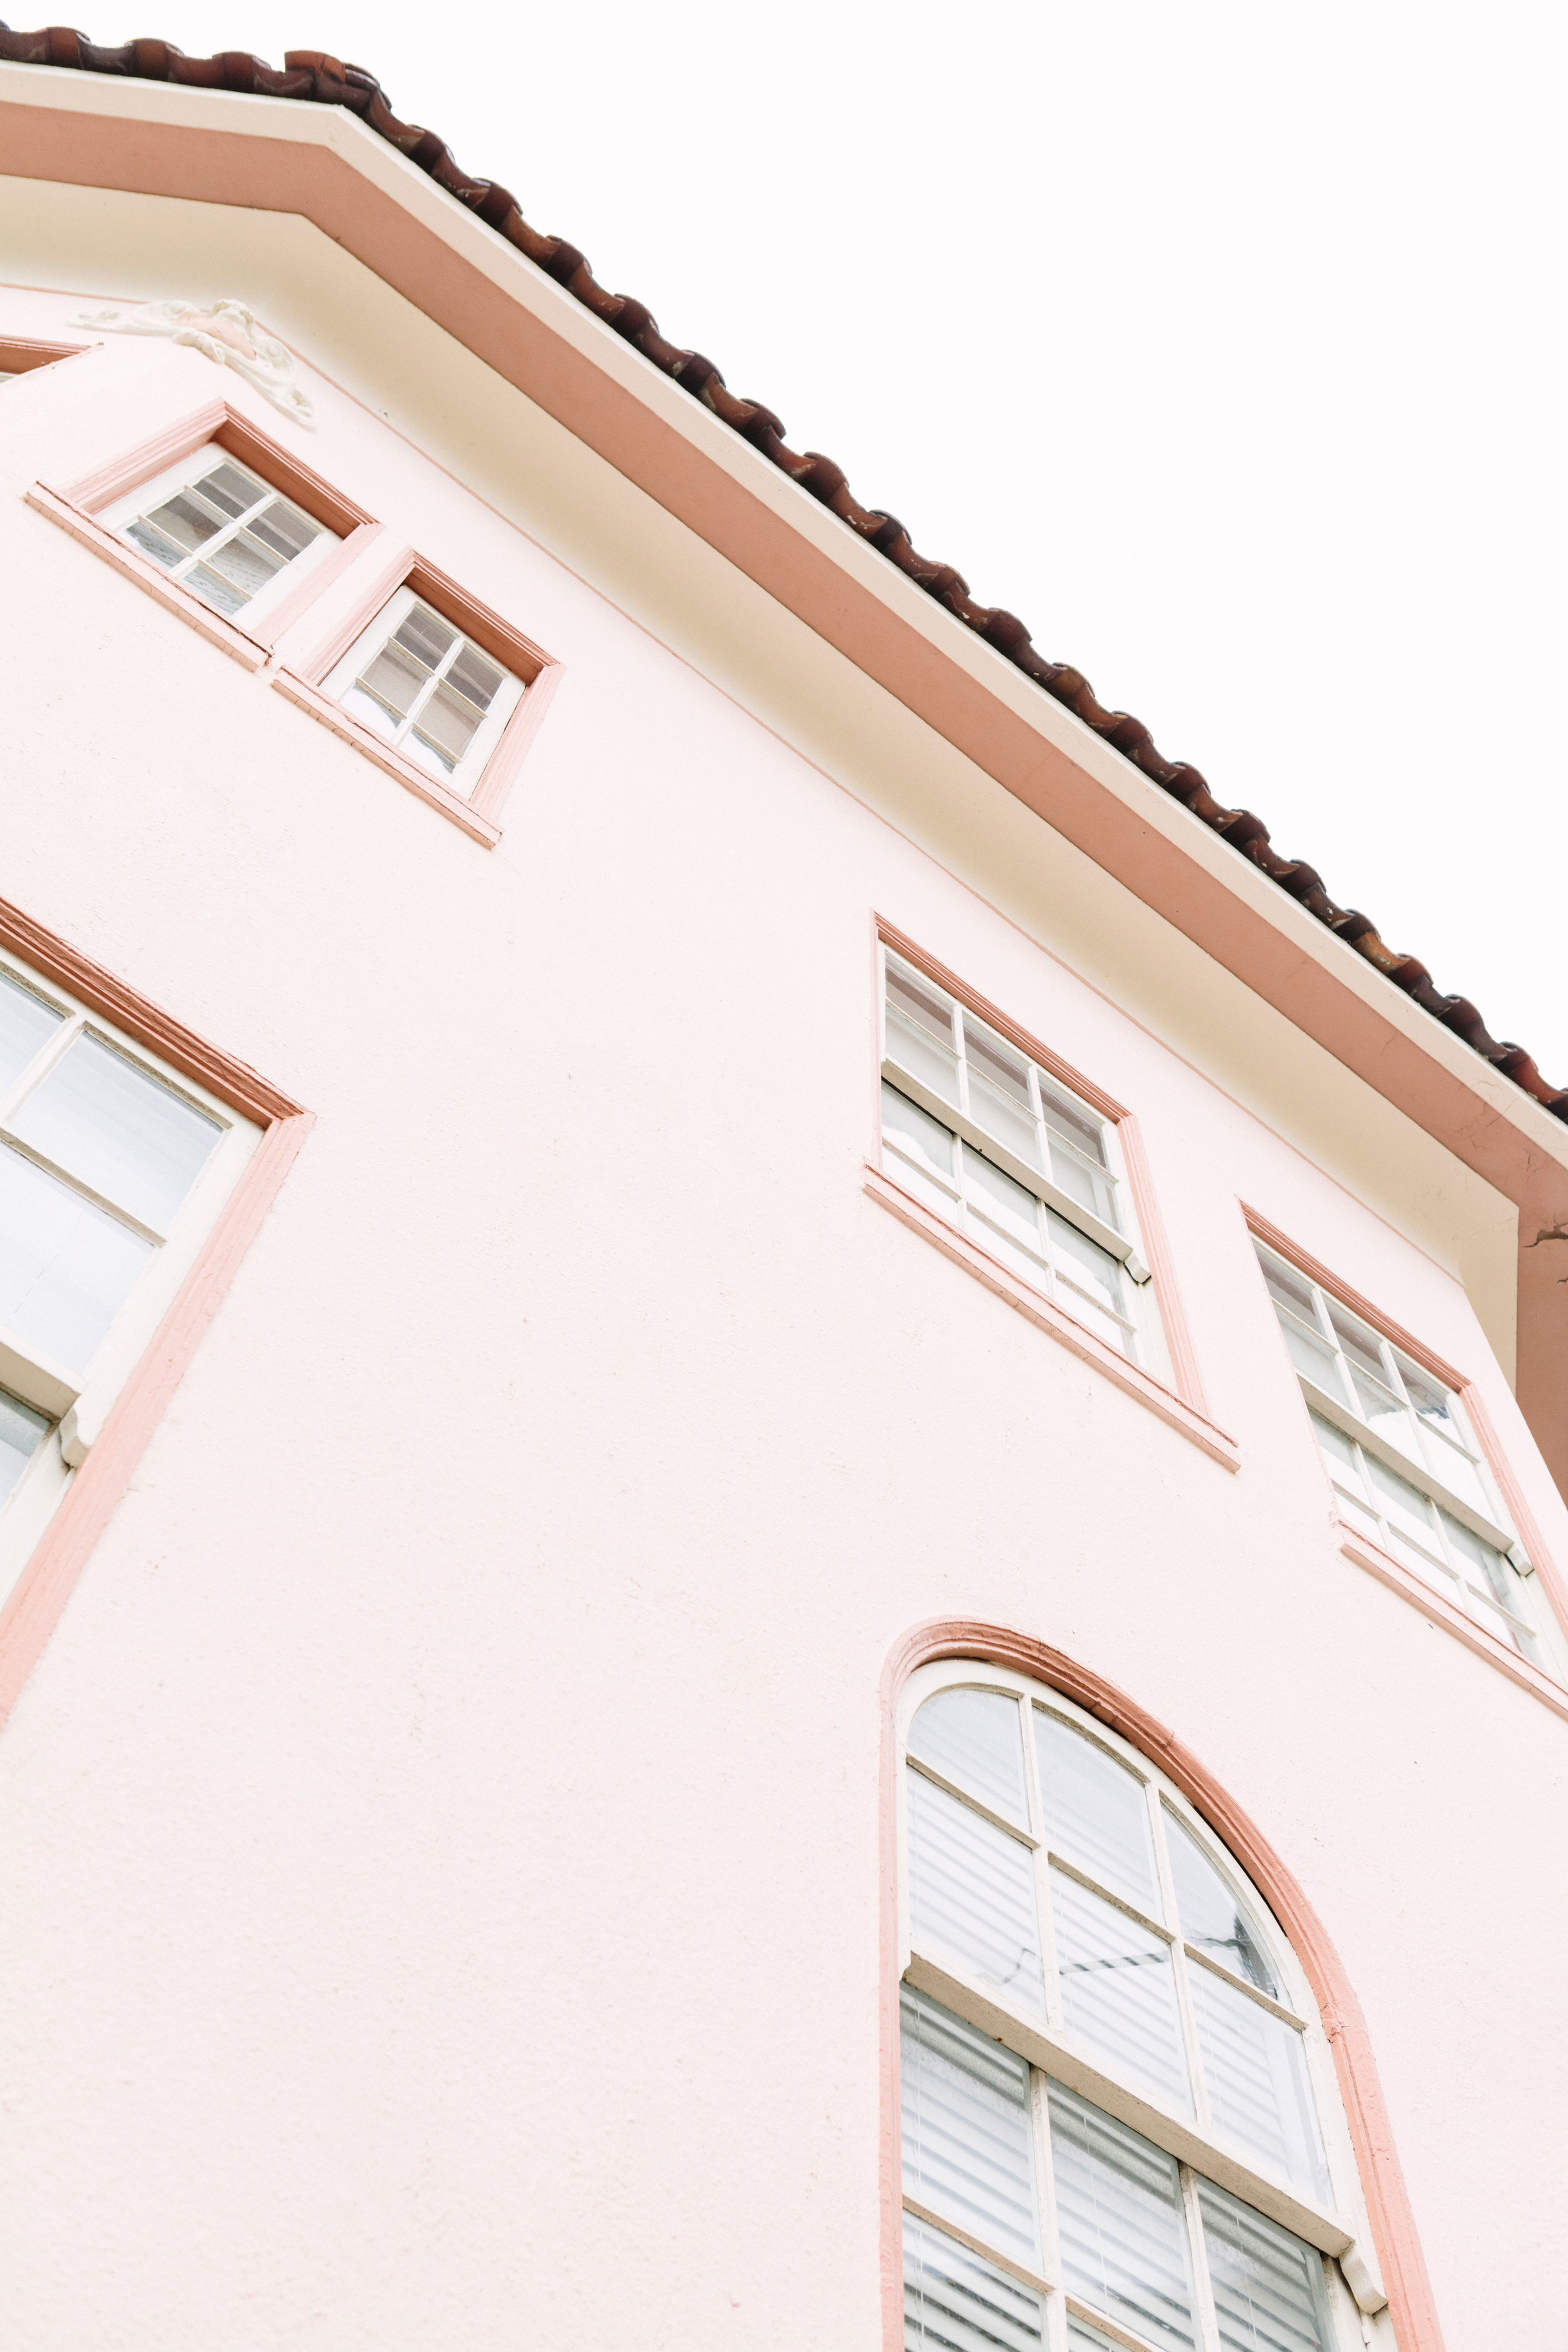 pink-house.jpg